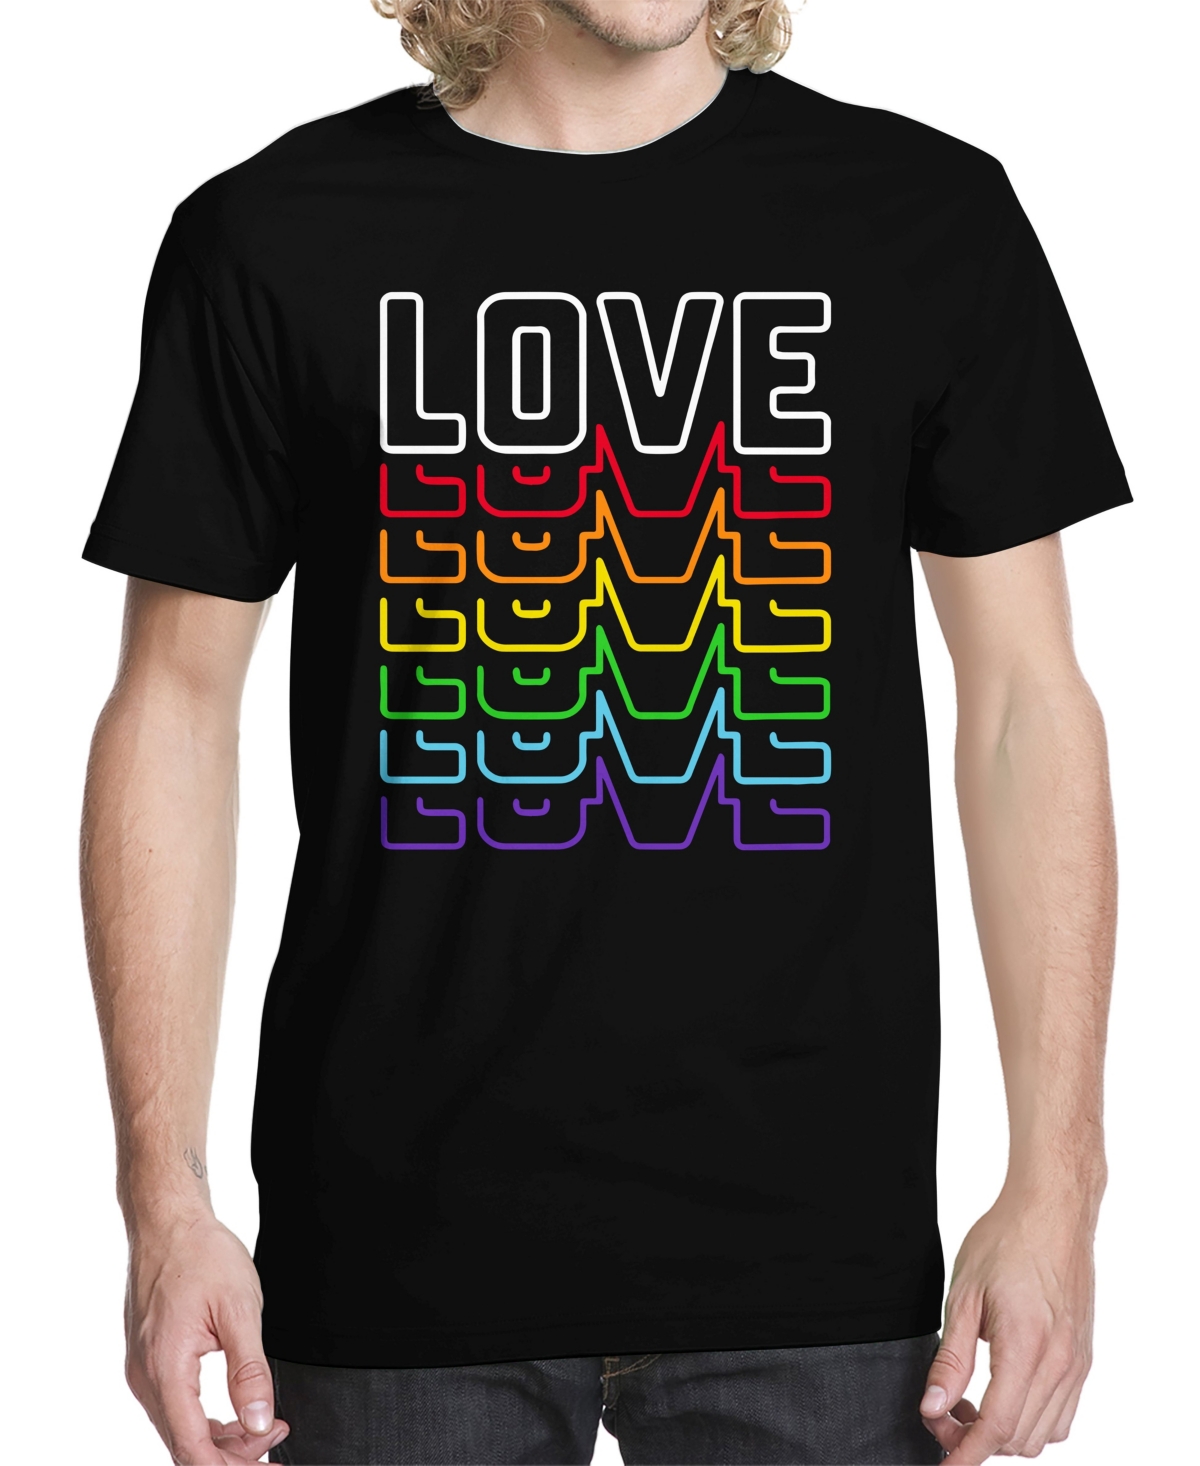 Men's Neon Love Graphic T-shirt - Black